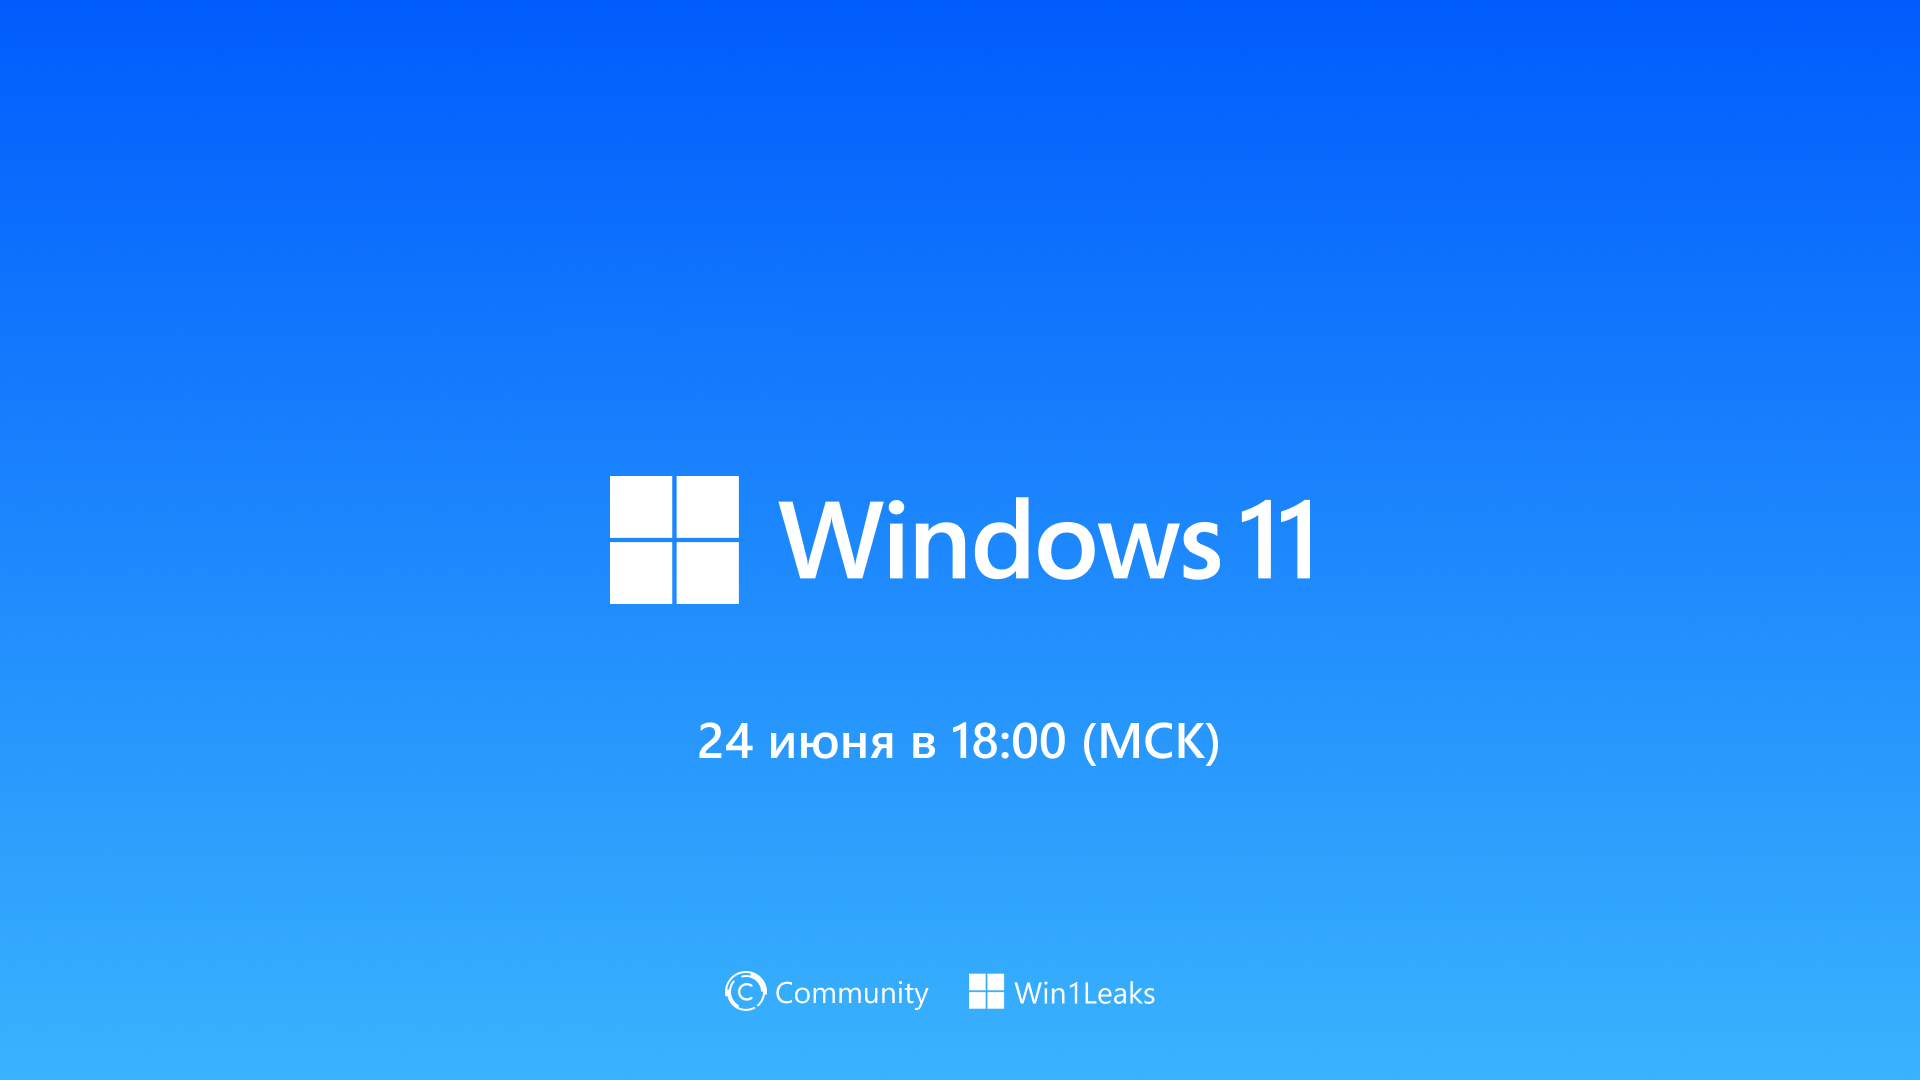 Презентации windows 11. Шиндовс 11. Майкрософт виндовс 11. Обновление Windows 11. Windows 11 презентация.